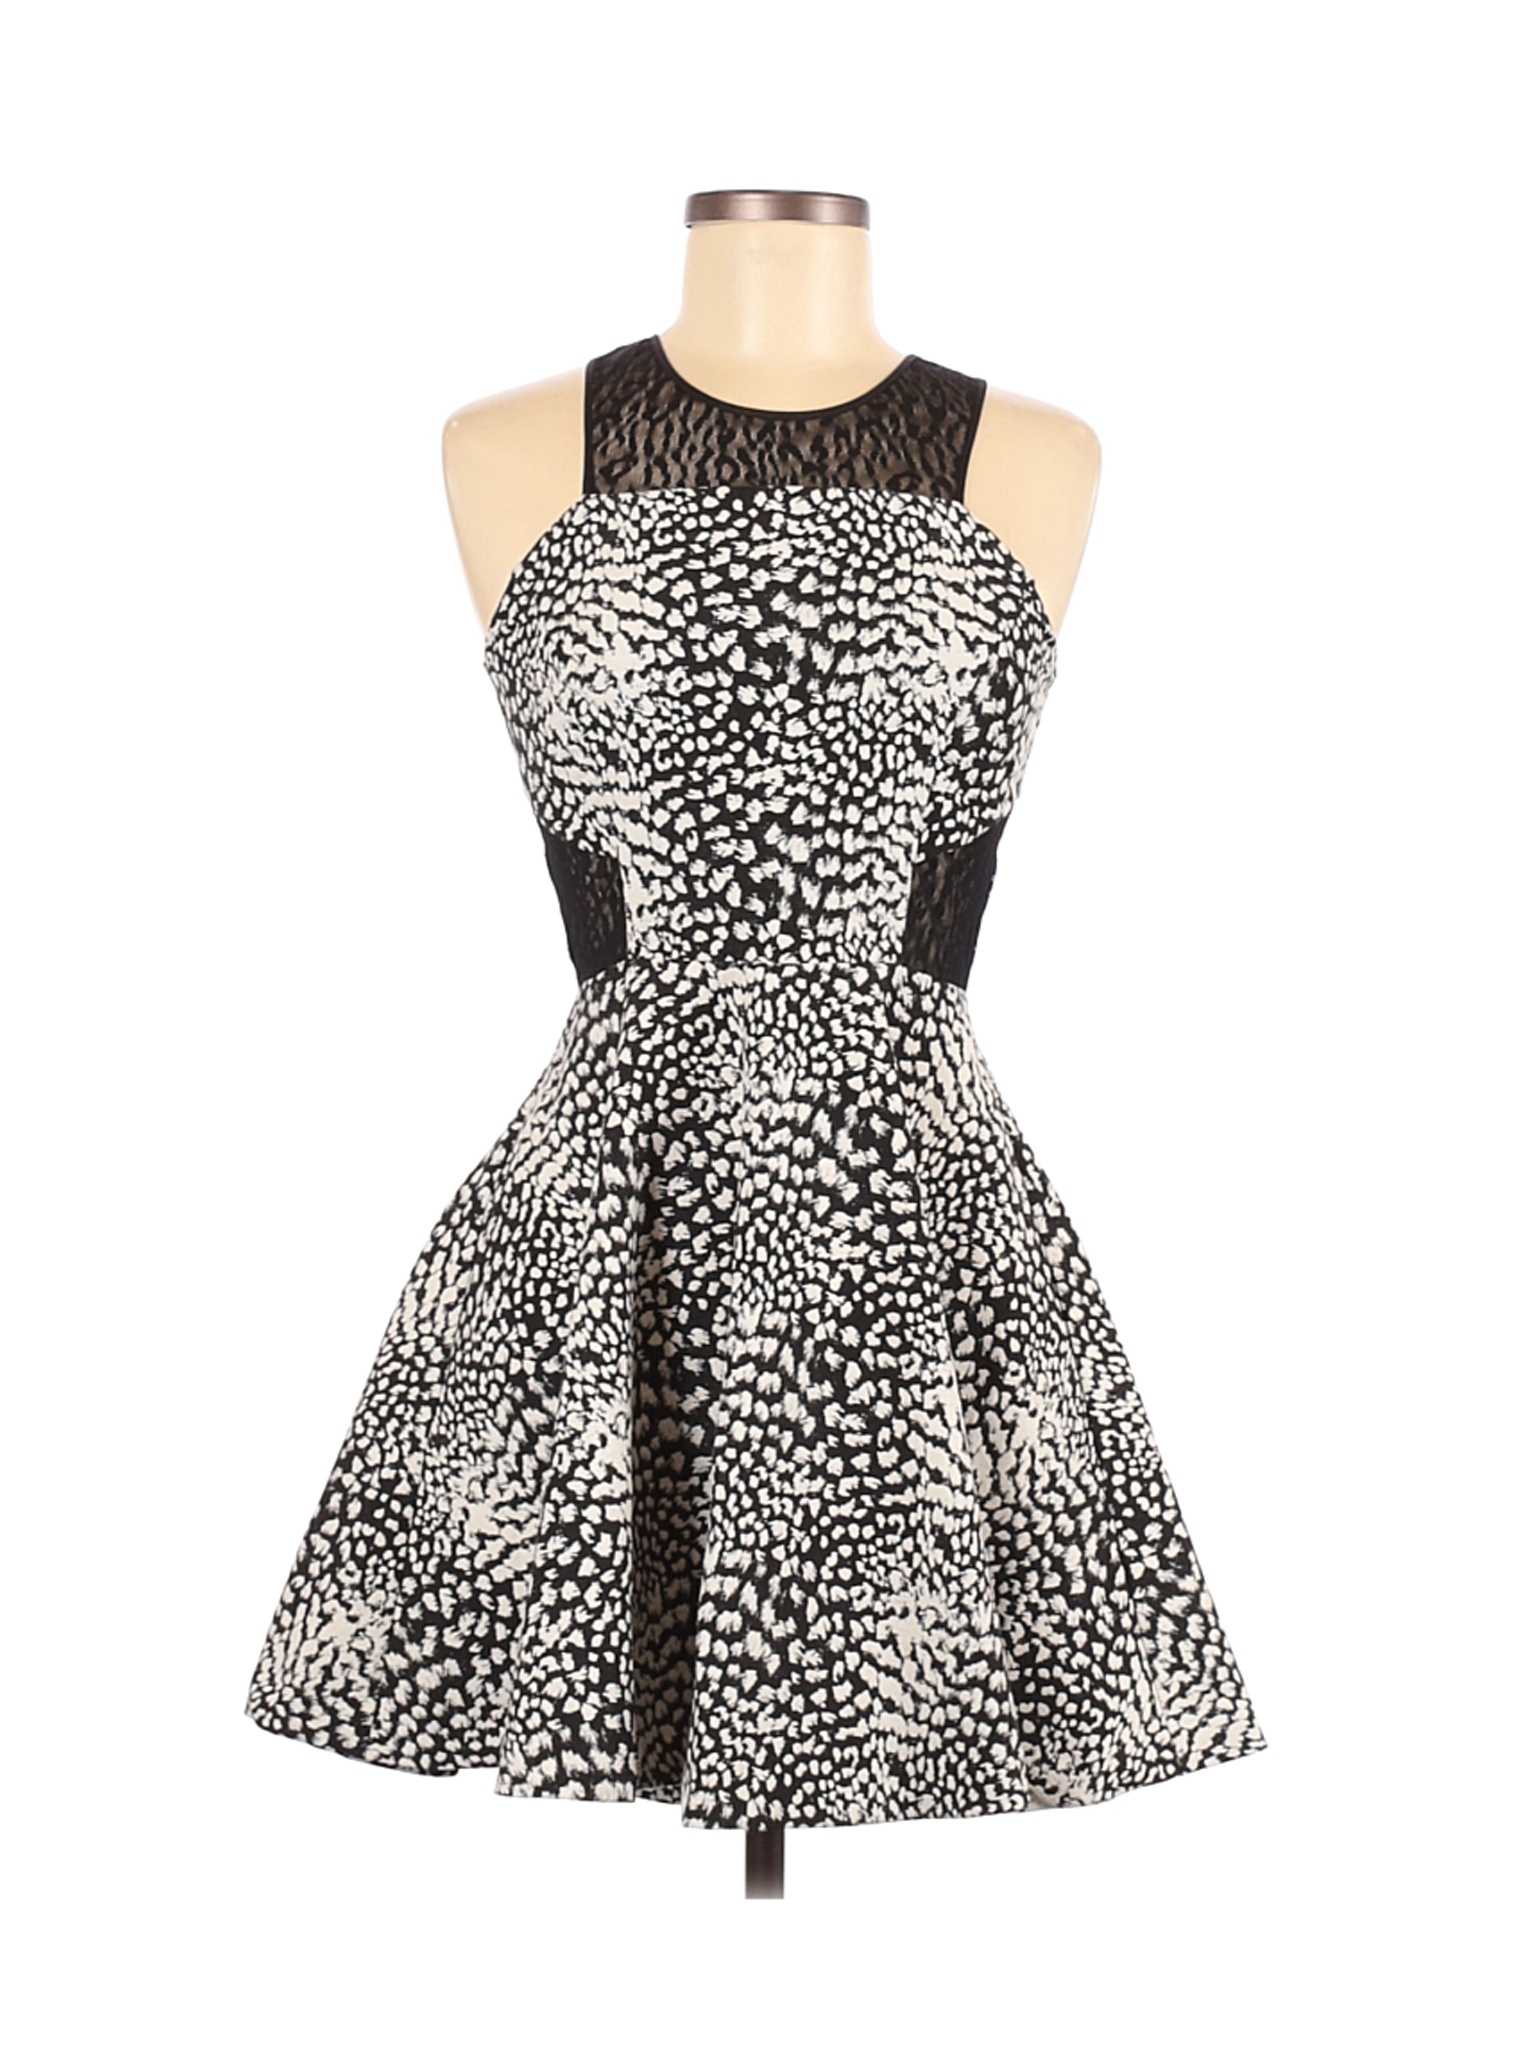 Parker Animal Print Black Casual Dress Size XS - 82% off | thredUP